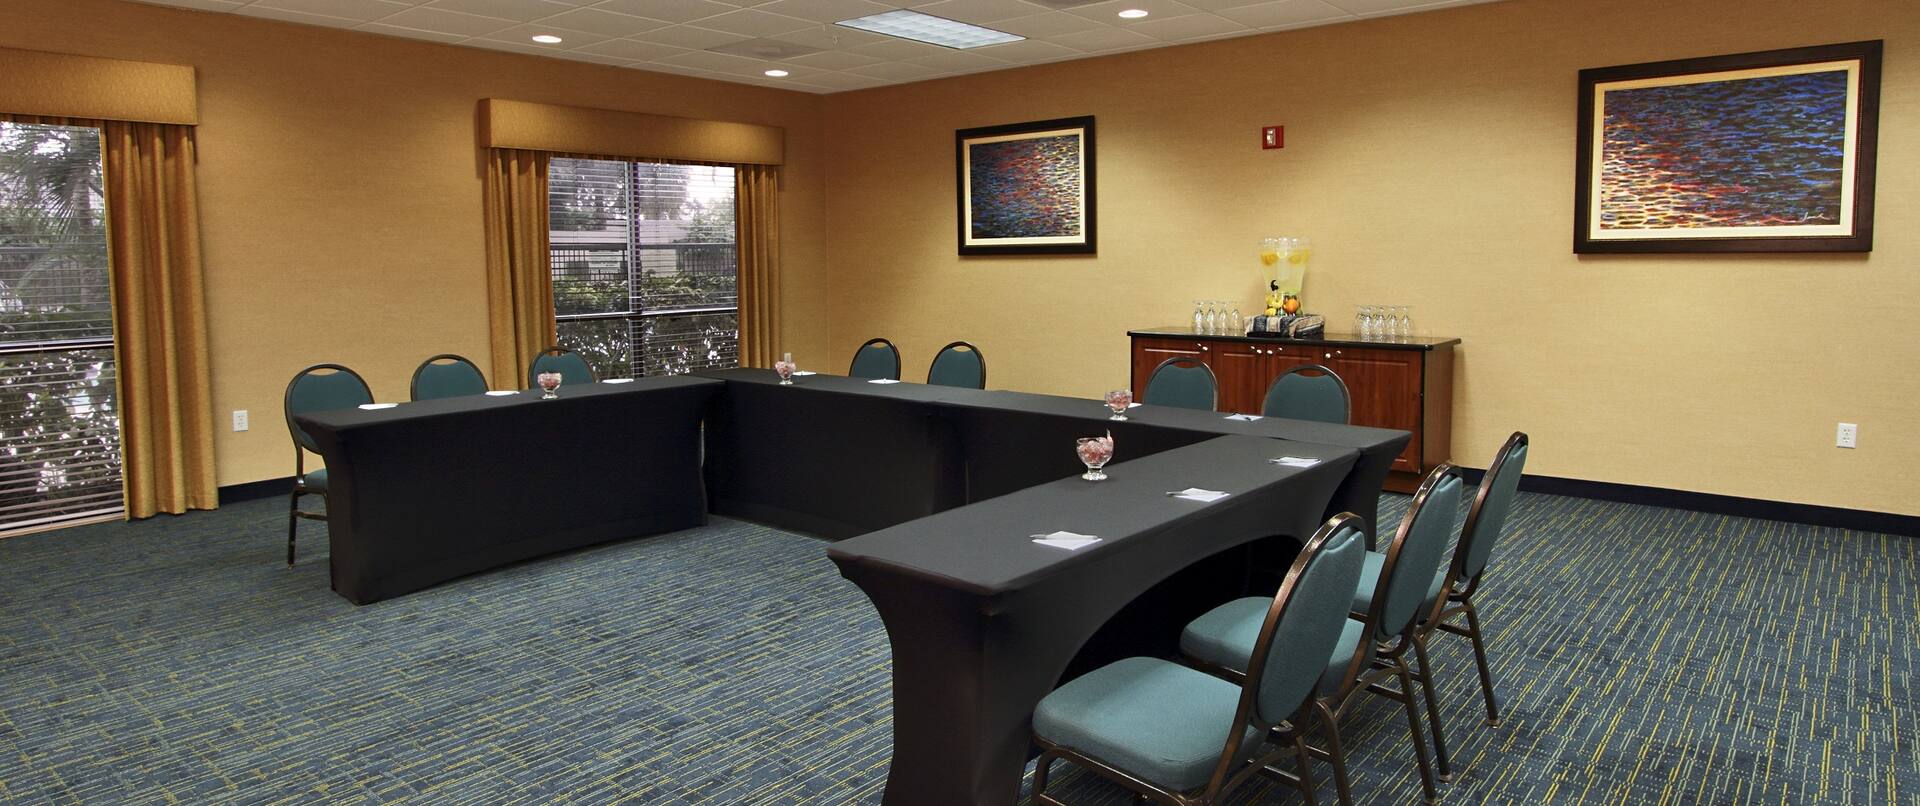 Meeting Room UShape Seating